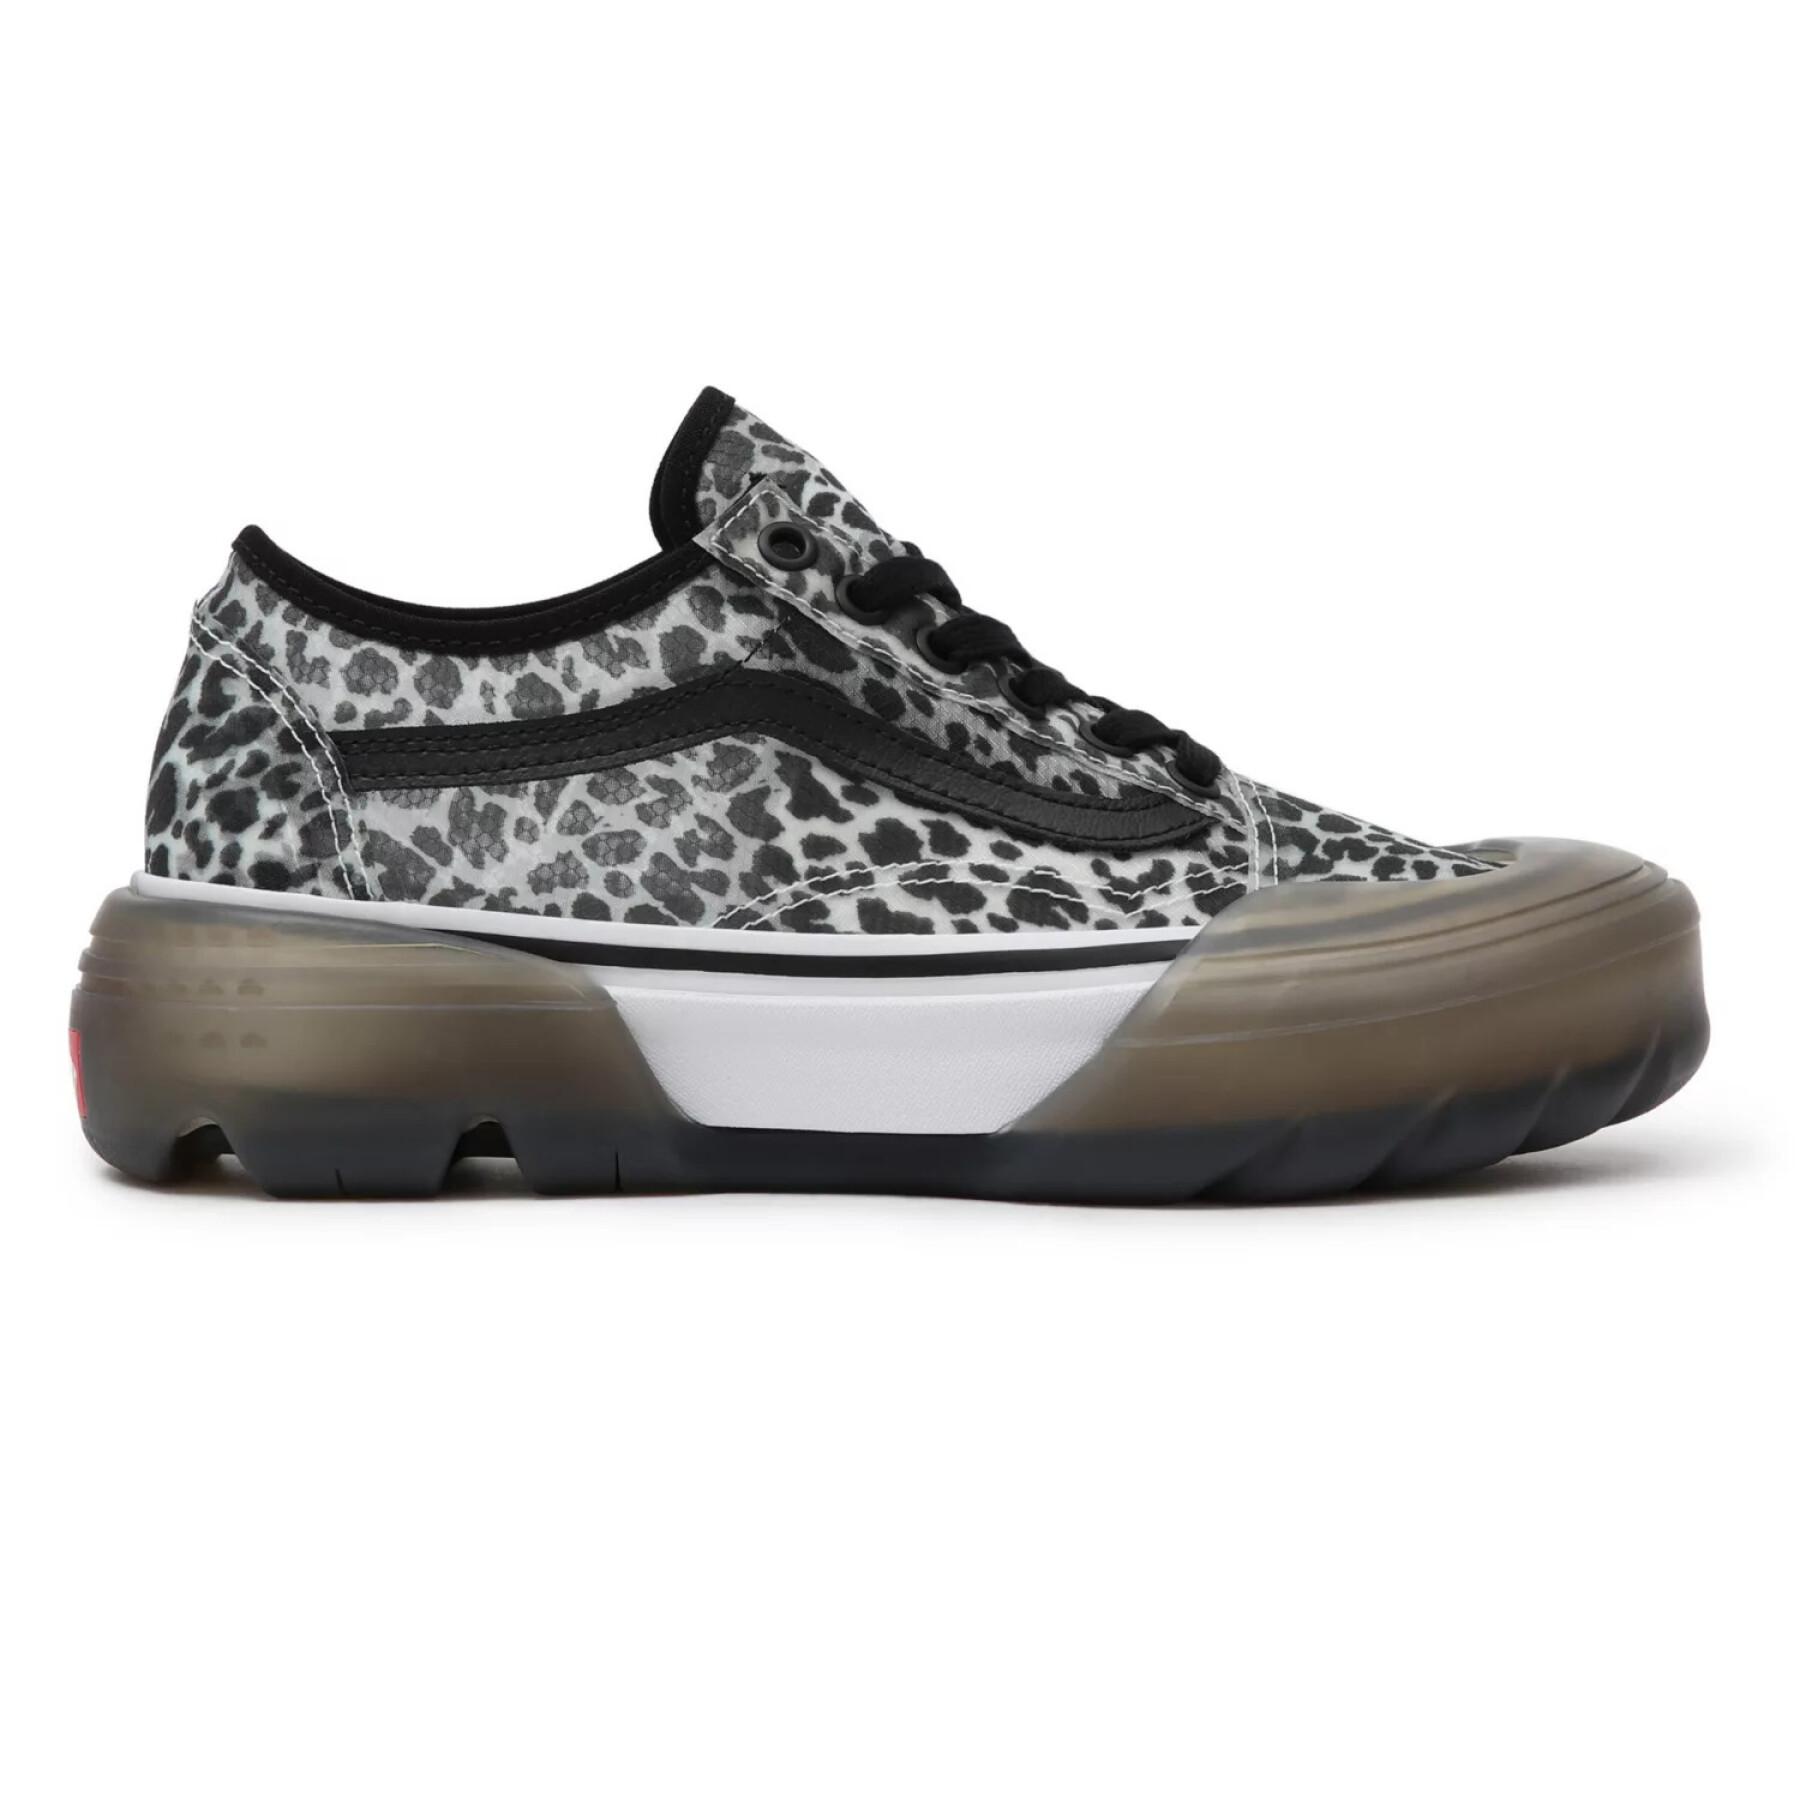 Zapatillas de deporte para mujeres Vans Old Skool Tapered DX Dots